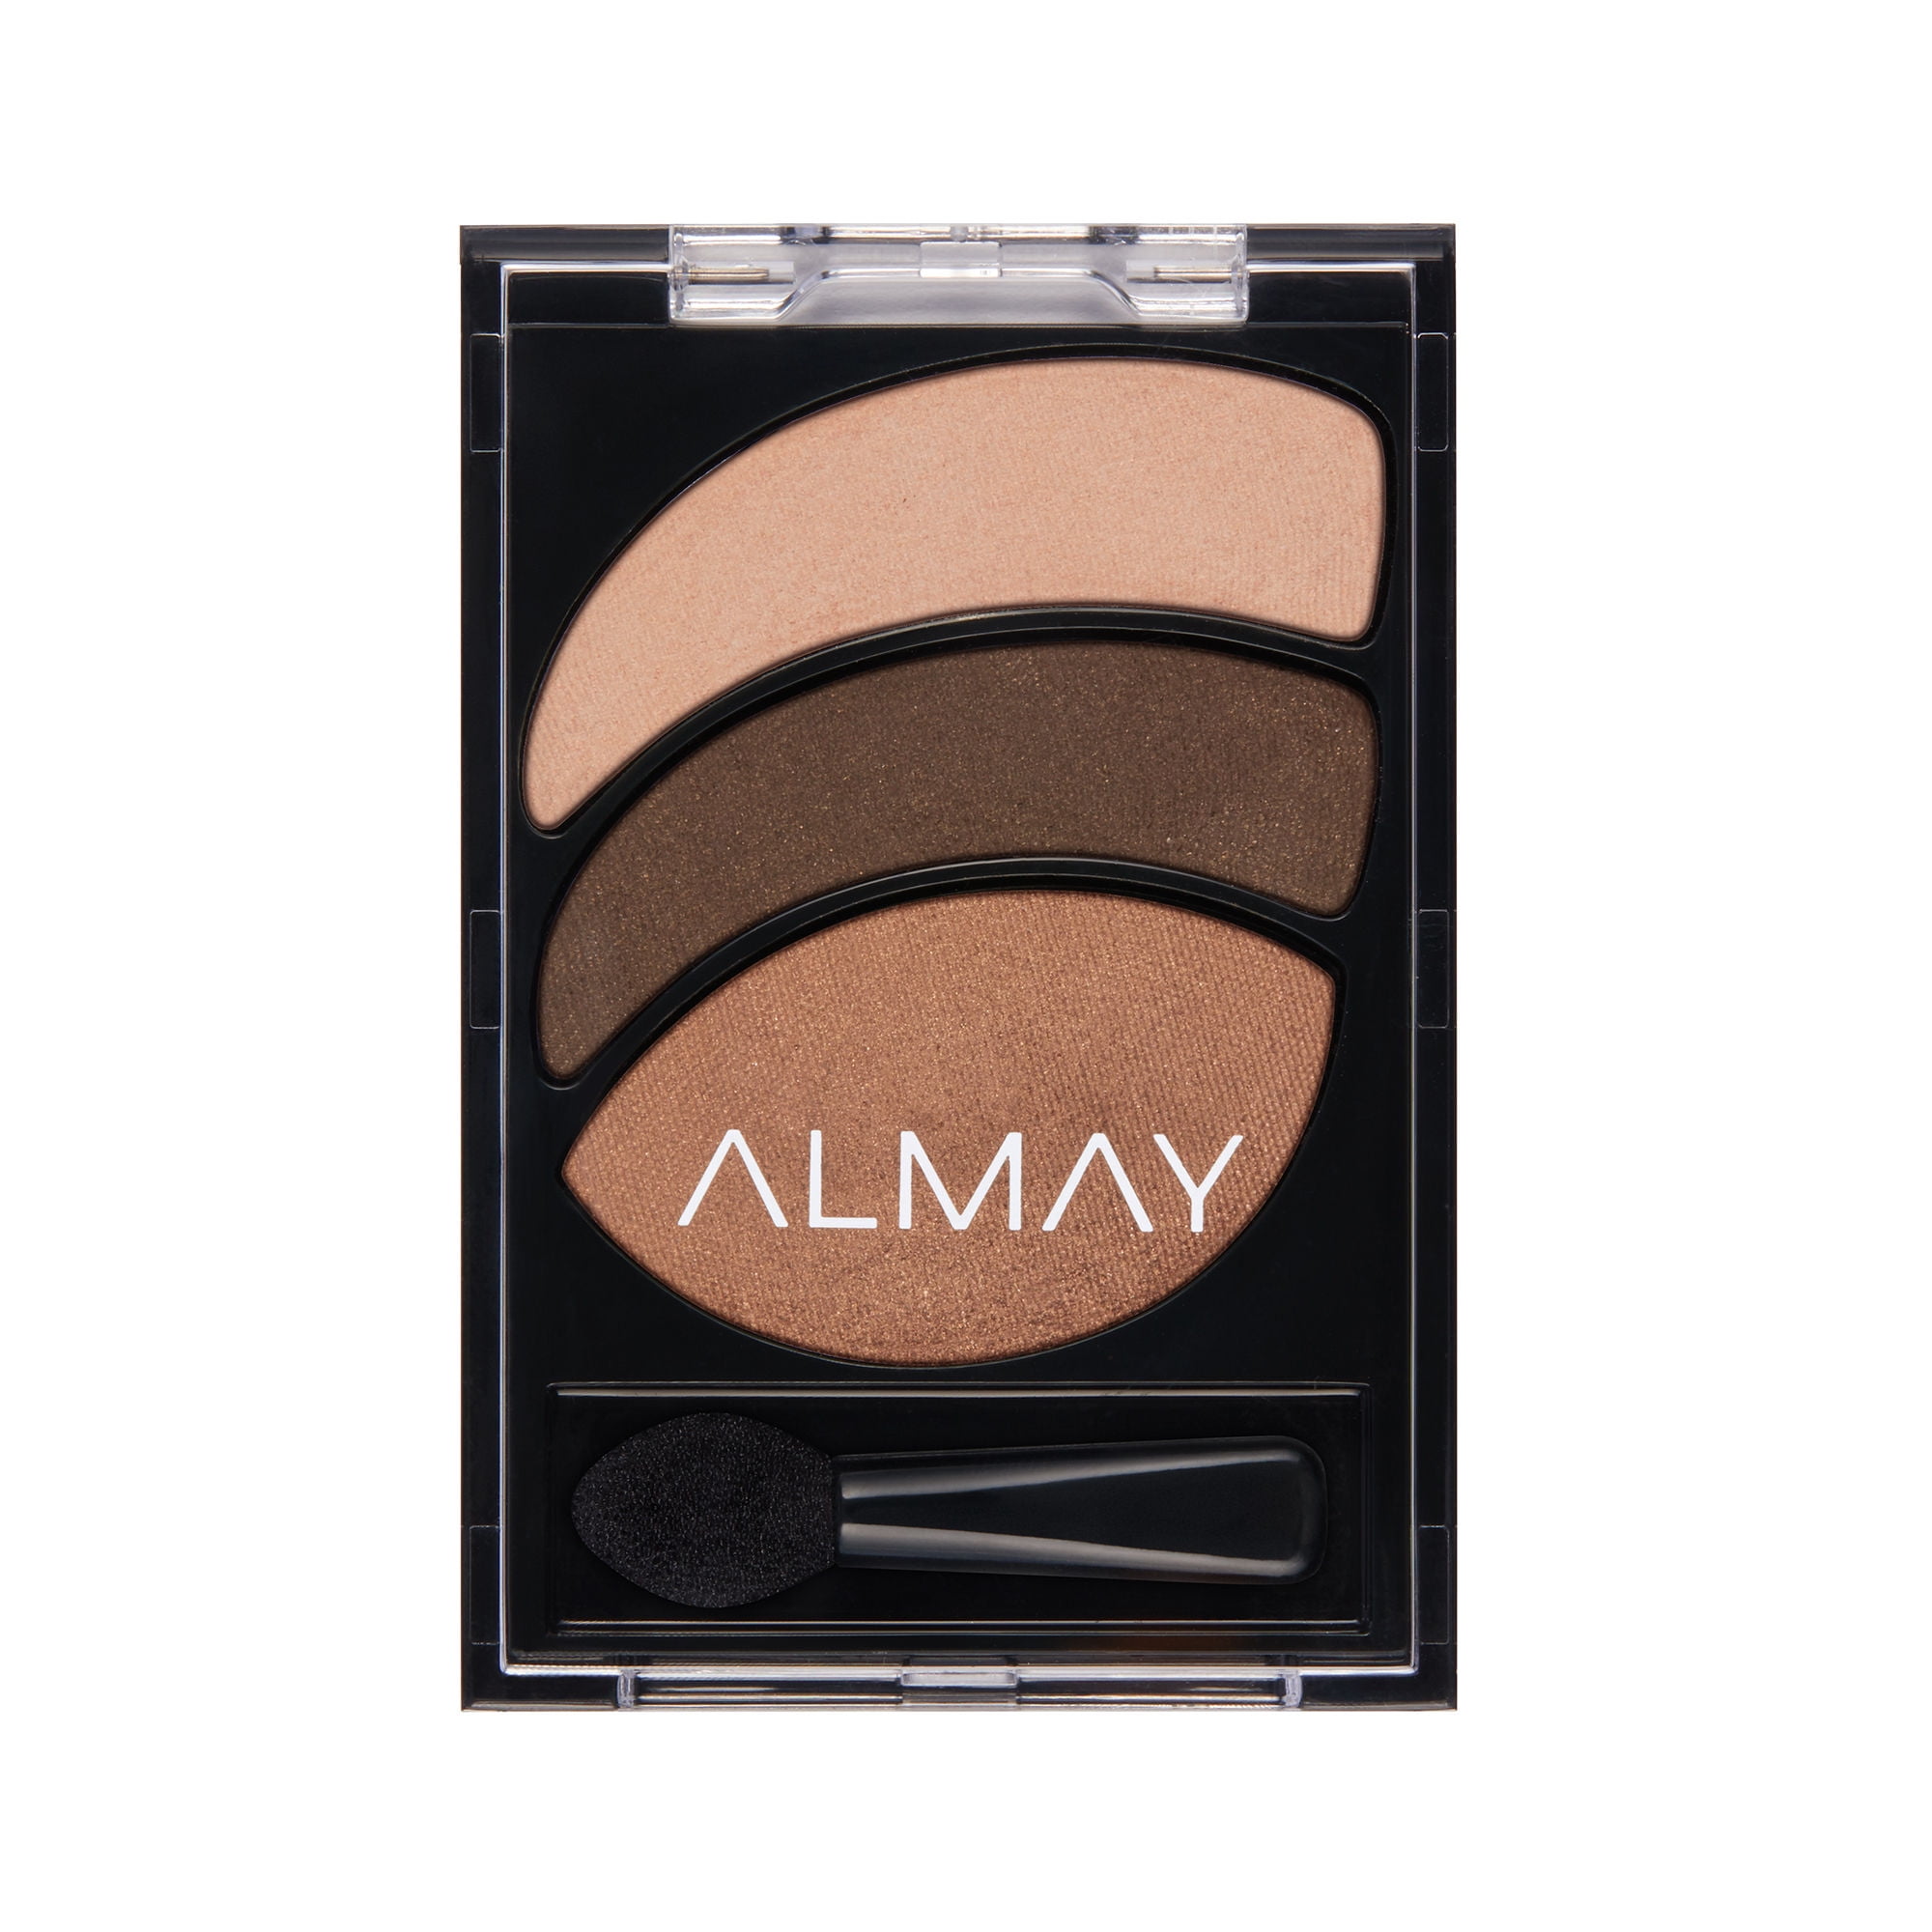 Almay Eyeshadow Palette by Almay, Longlasting Eye Makeup, Smoky Eye Trio, Hypoallergenic, 050 Everyday Neutrals, 0.19 Oz.